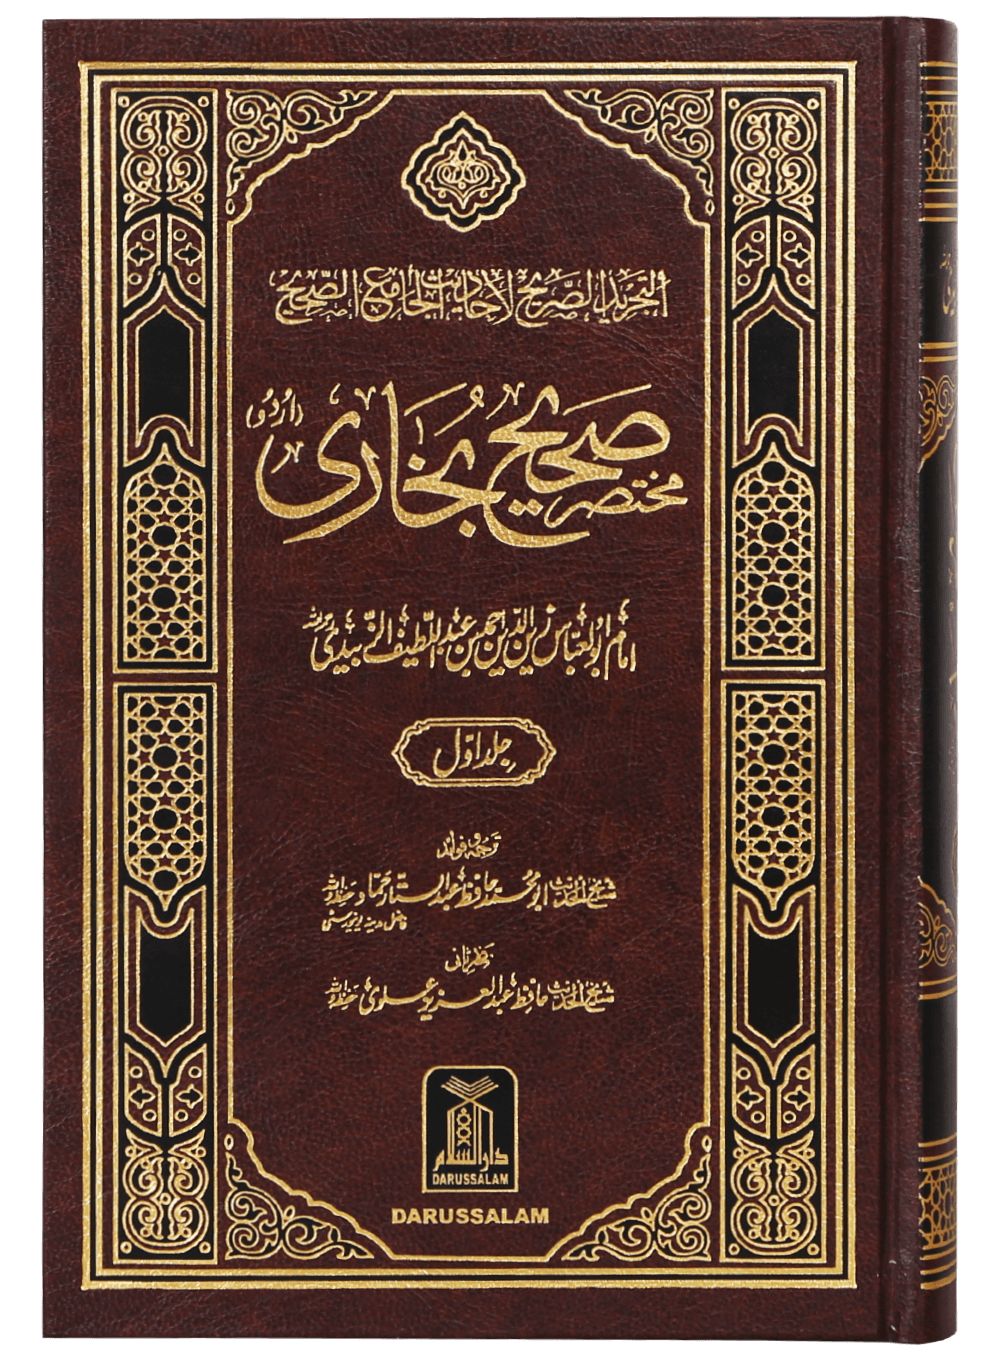 Mukhtasir Sahih Al-Bukhari (2 vols) - Imported

مختصرصحیح بخاری